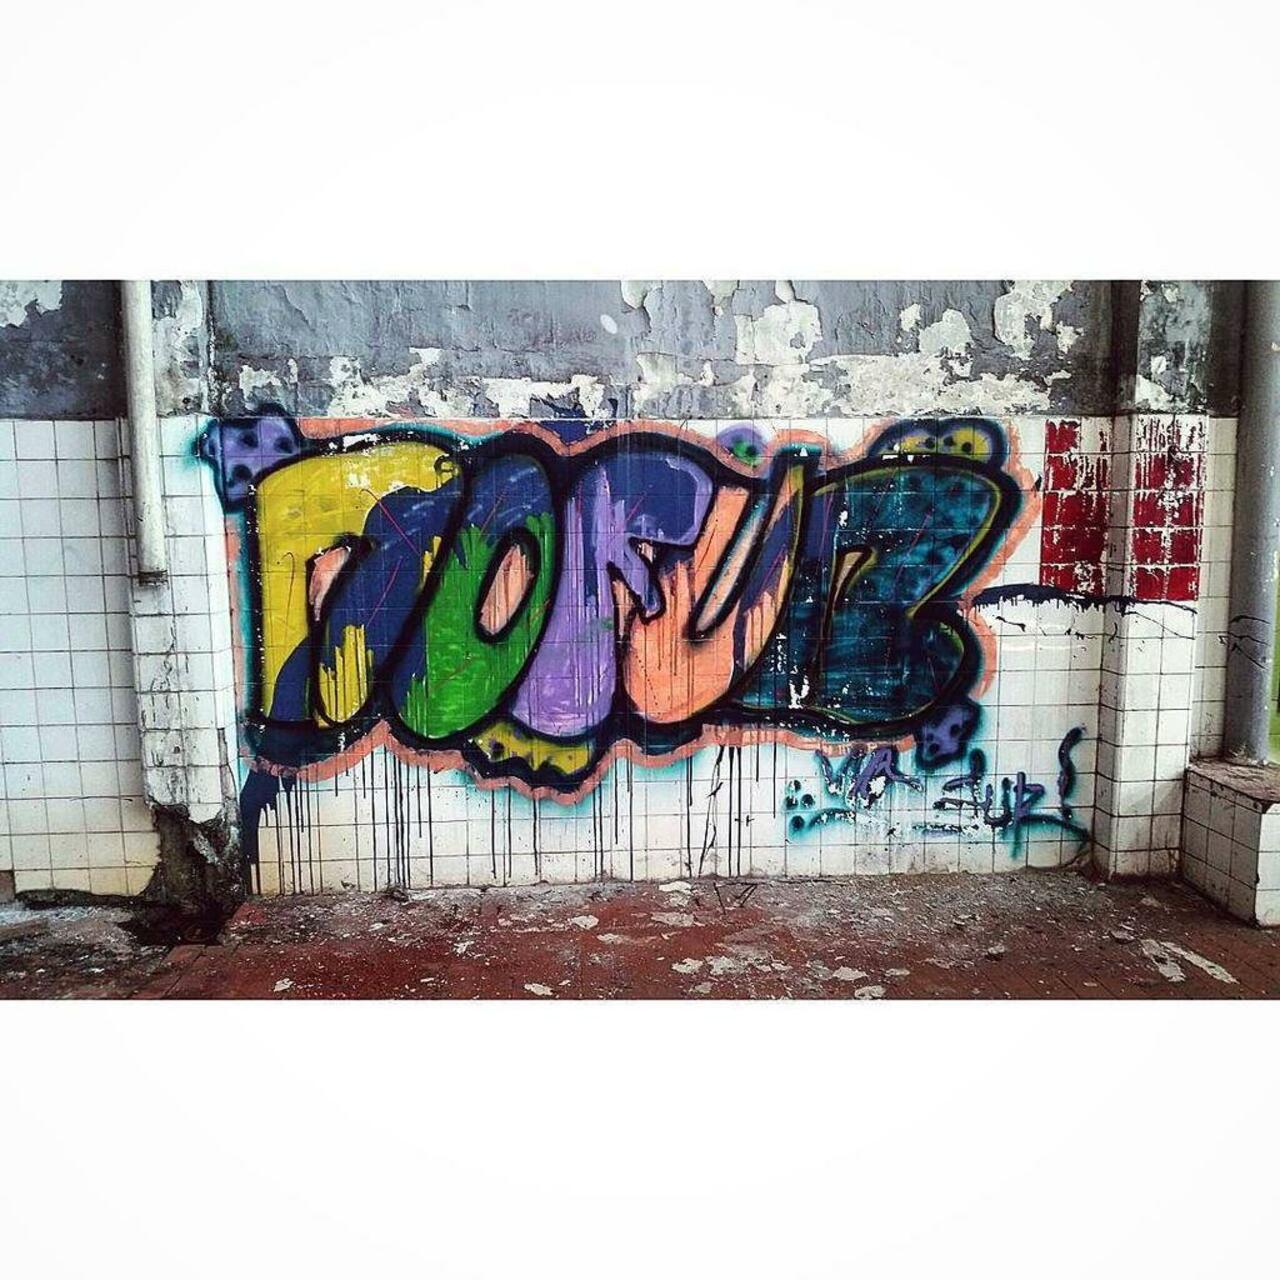 RT @artpushr: via #mattheusmoraes "http://bit.ly/1FXFs3a" #graffiti #streetart http://t.co/Q7pN2qlY5j